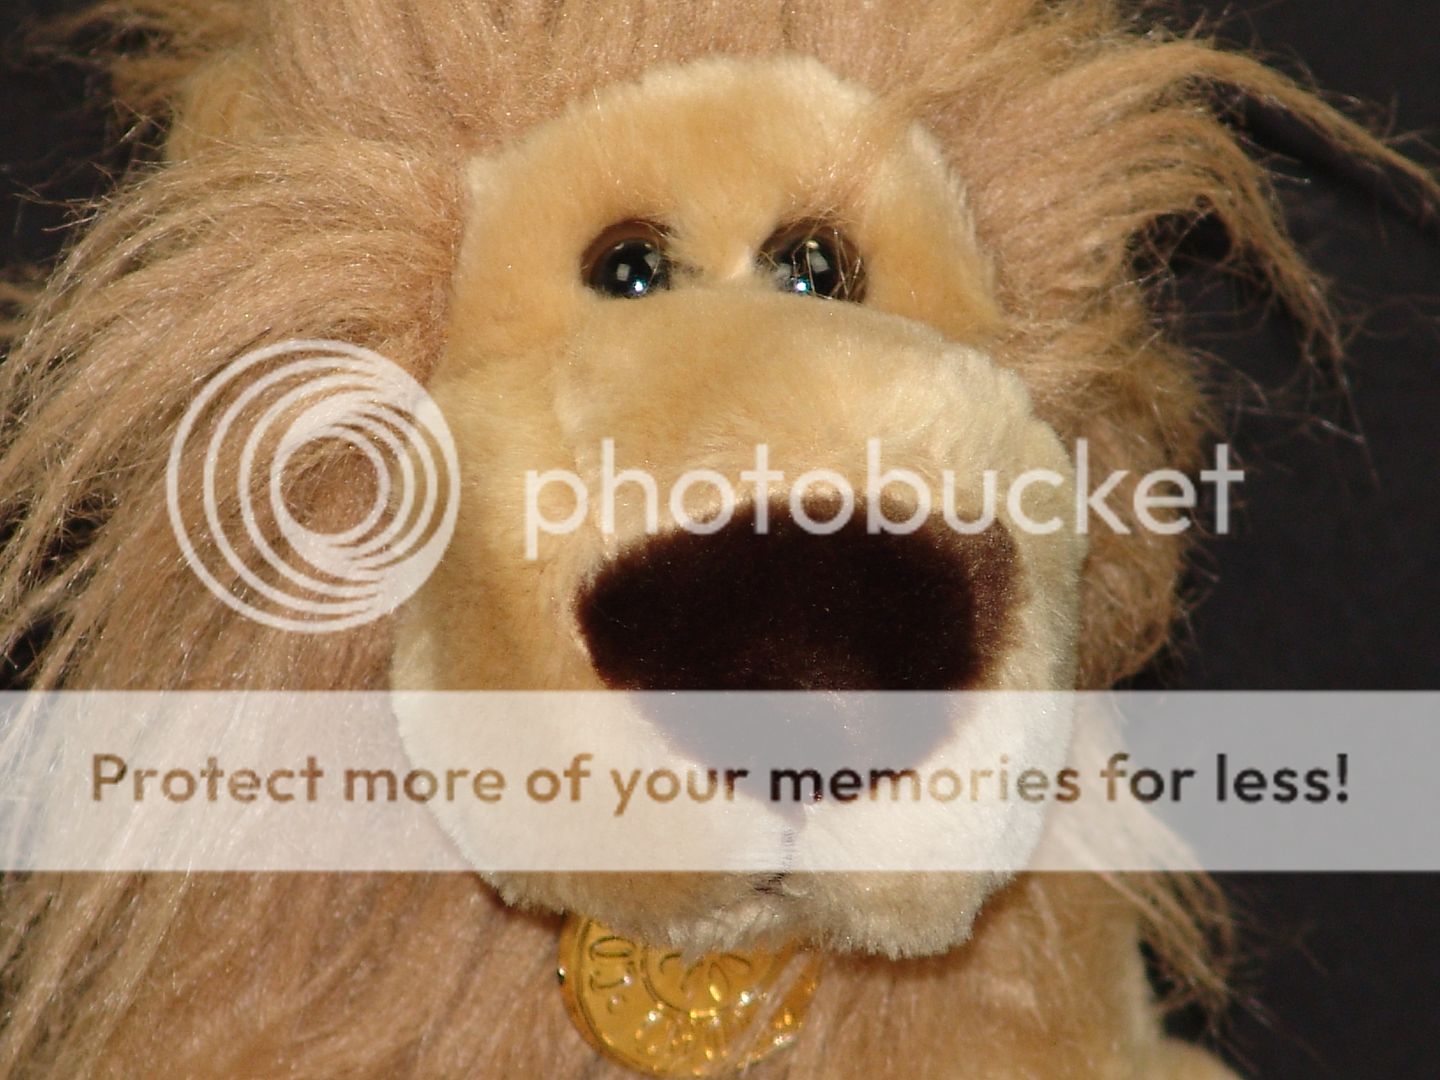 DanDee Collectors Classics Lifelike Big Lion Mane Plush Stuffed Animal